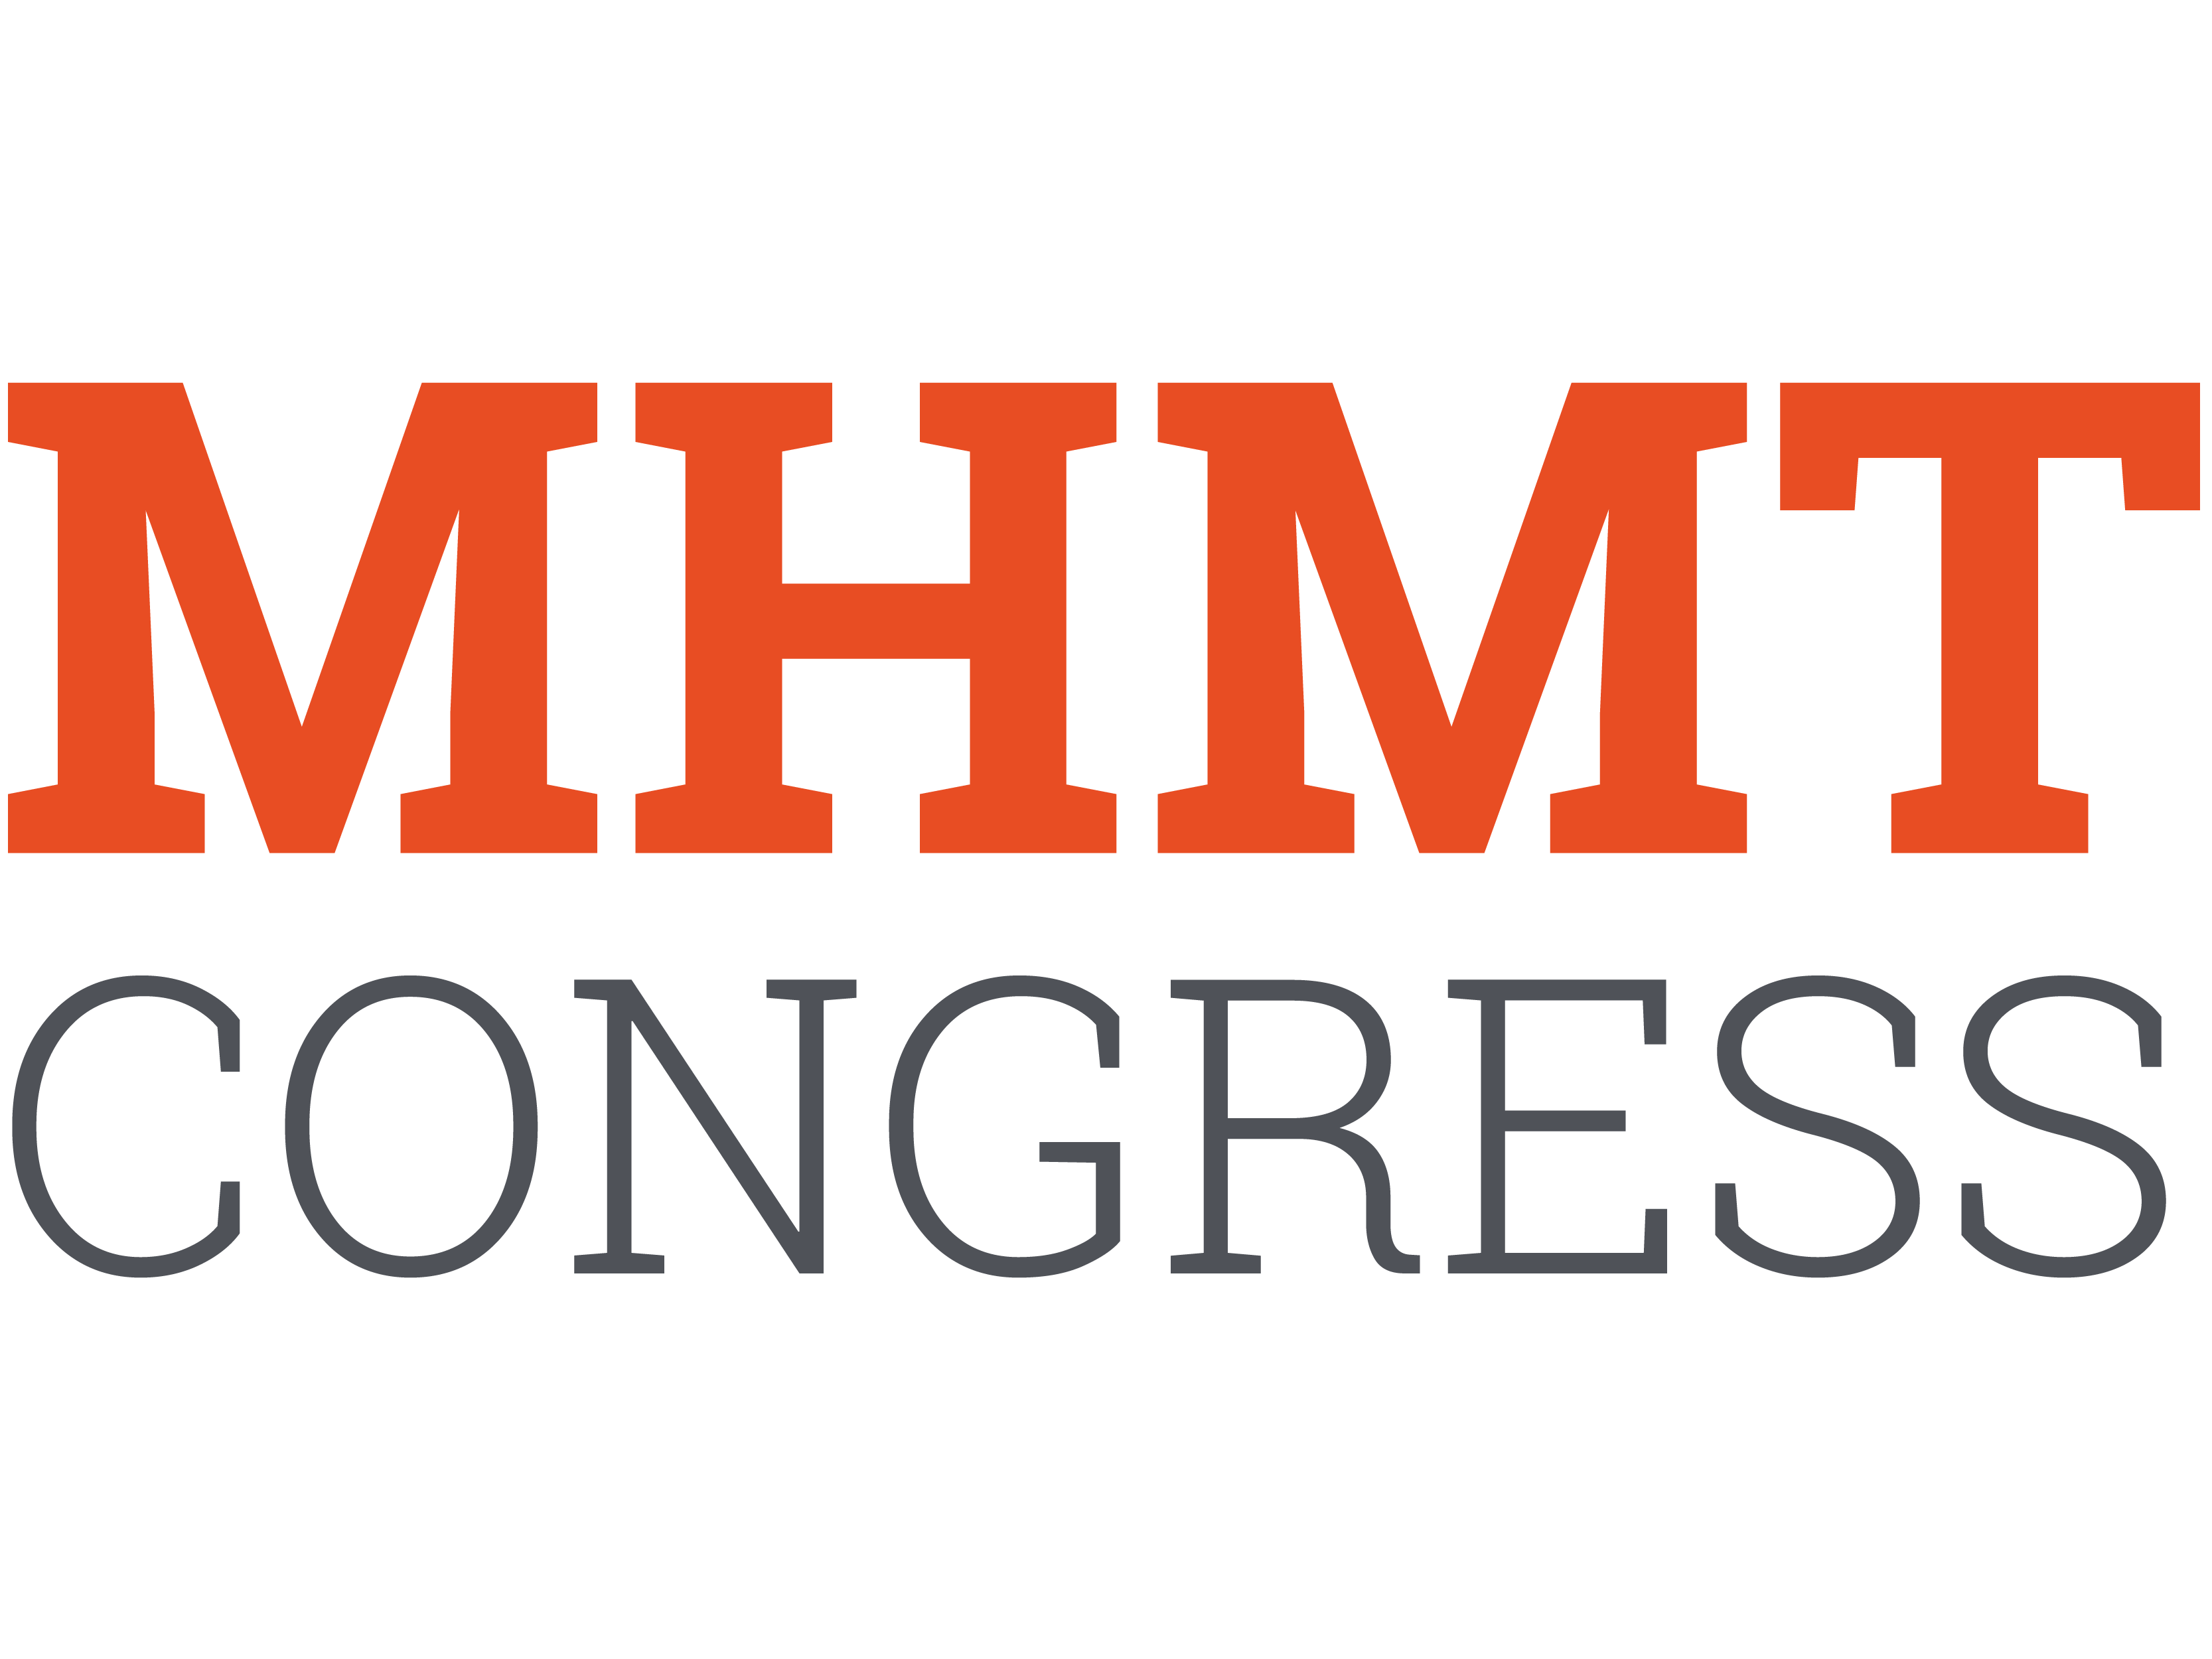 7th World Congress on Momentum, Heat and Mass Transfer, Lisbon, Portugal, April 10 - 12, 2019